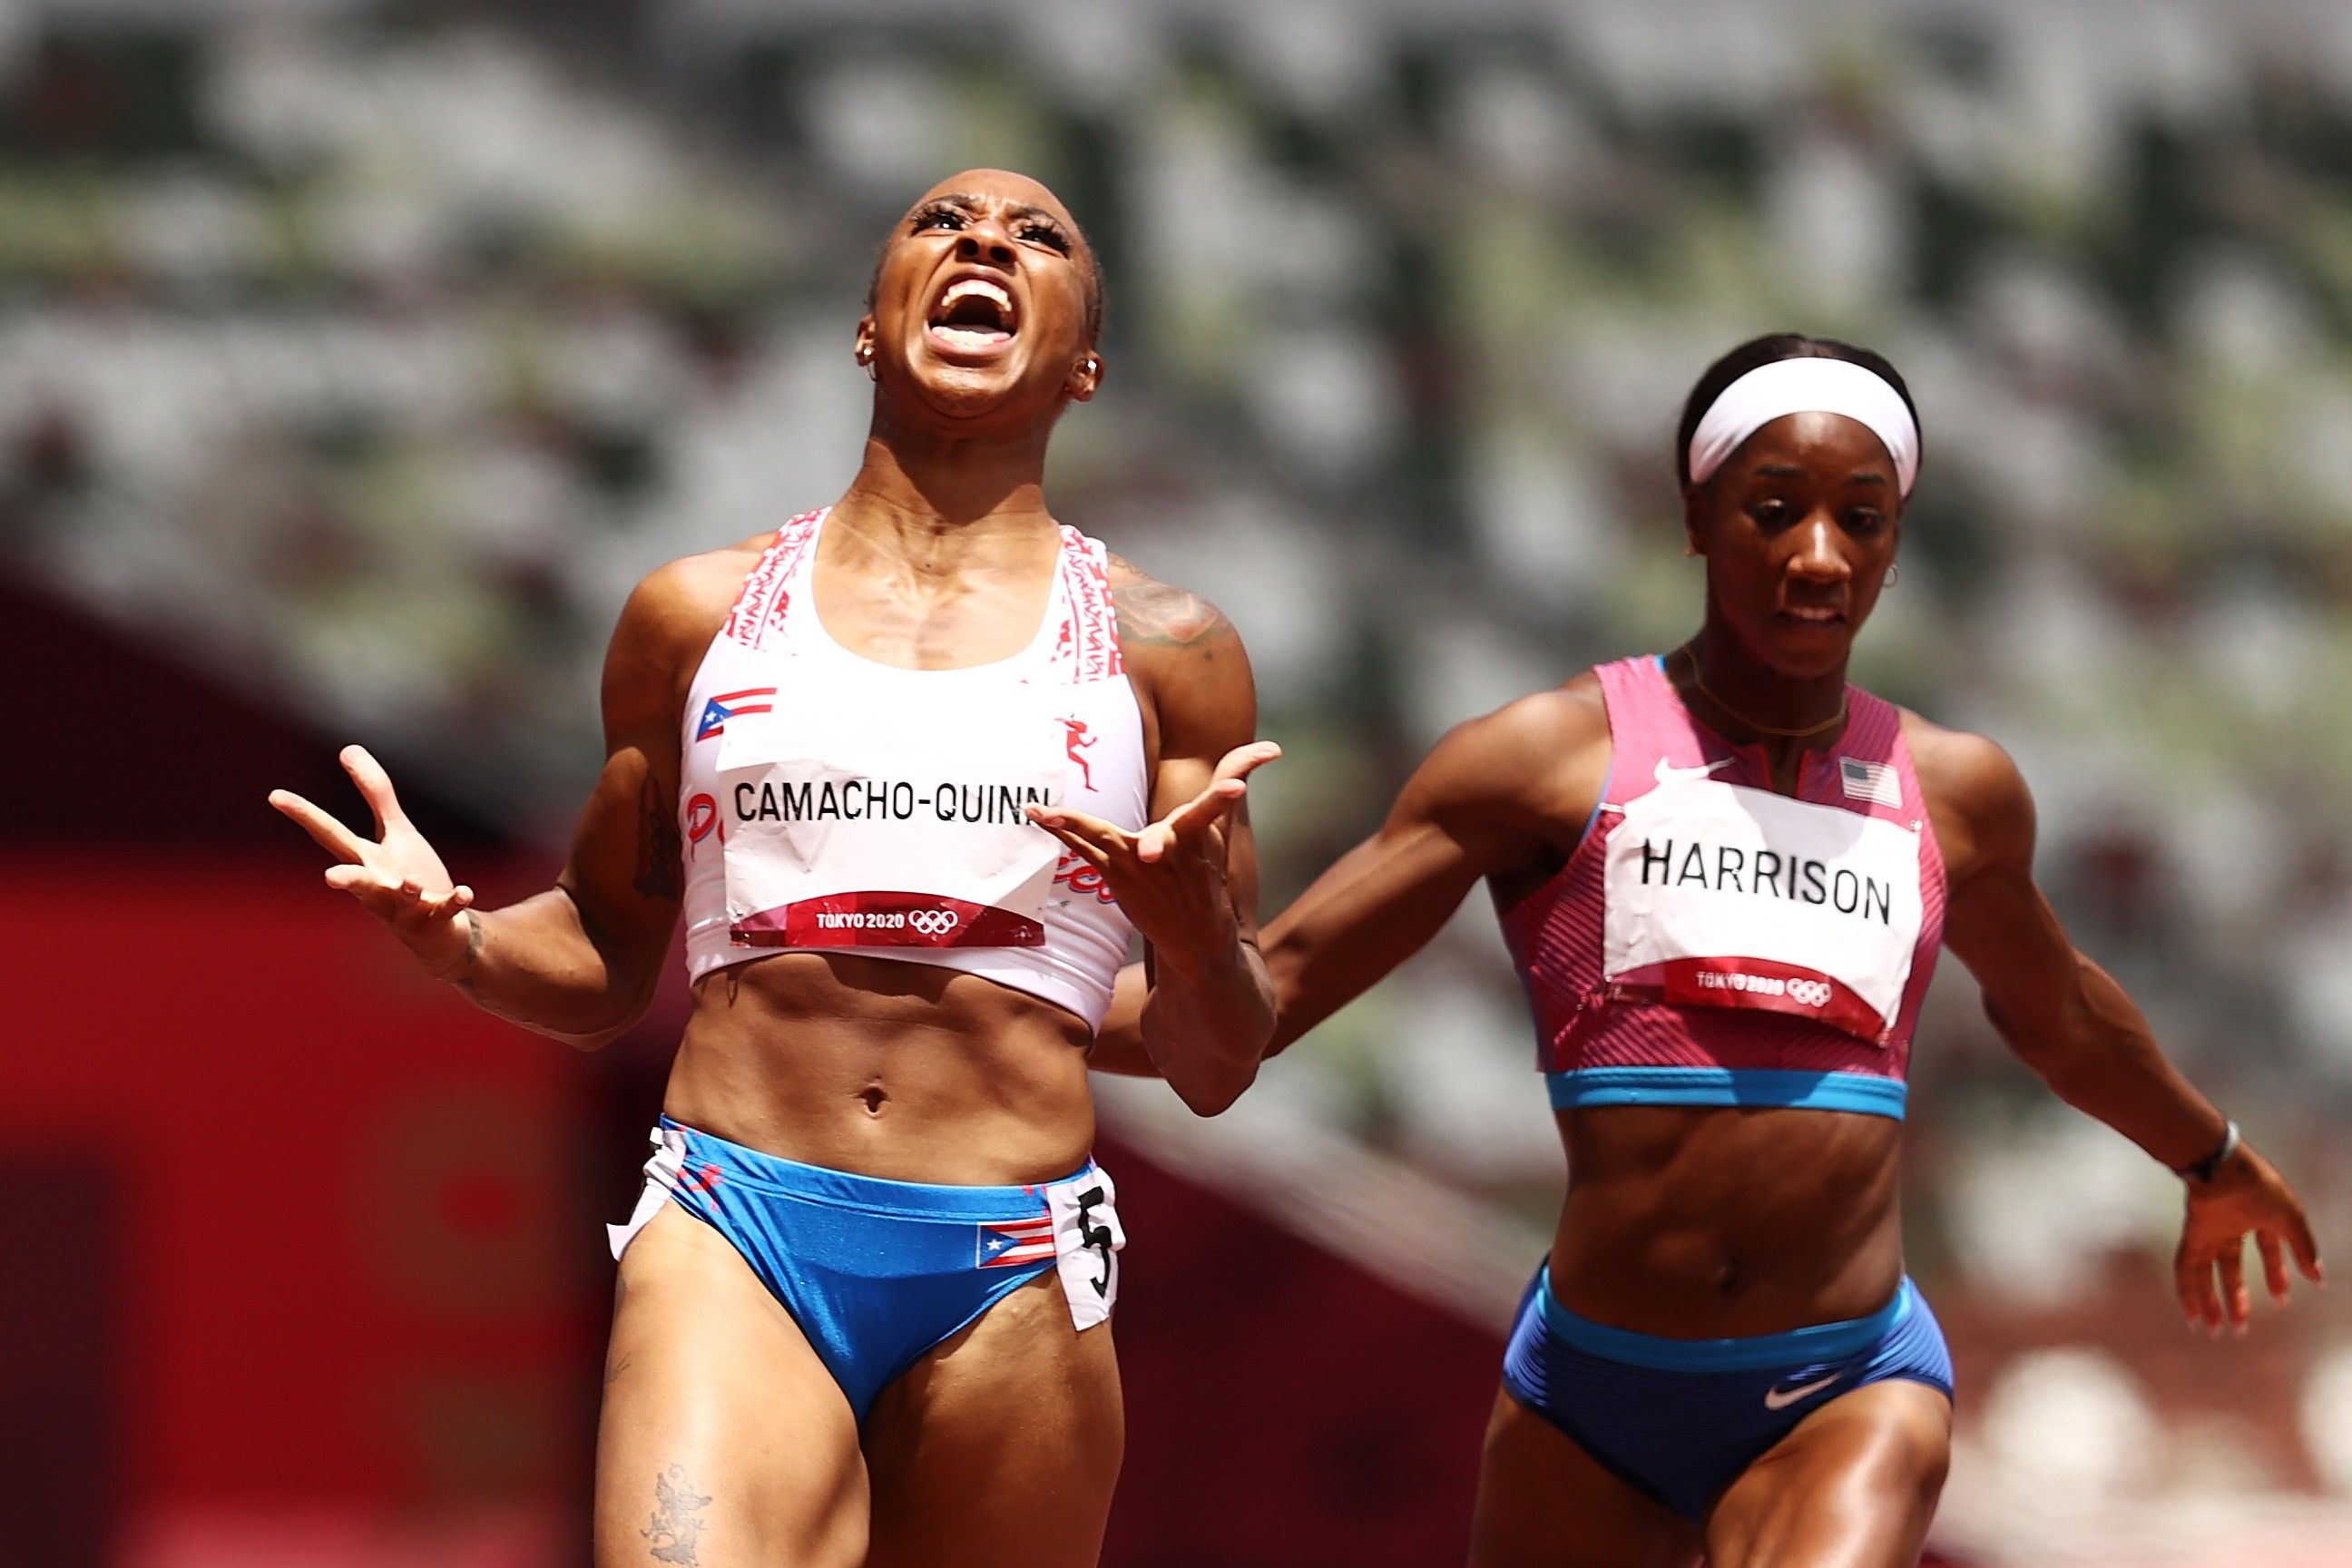 Jasmine Camacho-Quinn wins 100m hurdles gold ahead of Kendra Harrison at the Tokyo 2020 Olympic Games